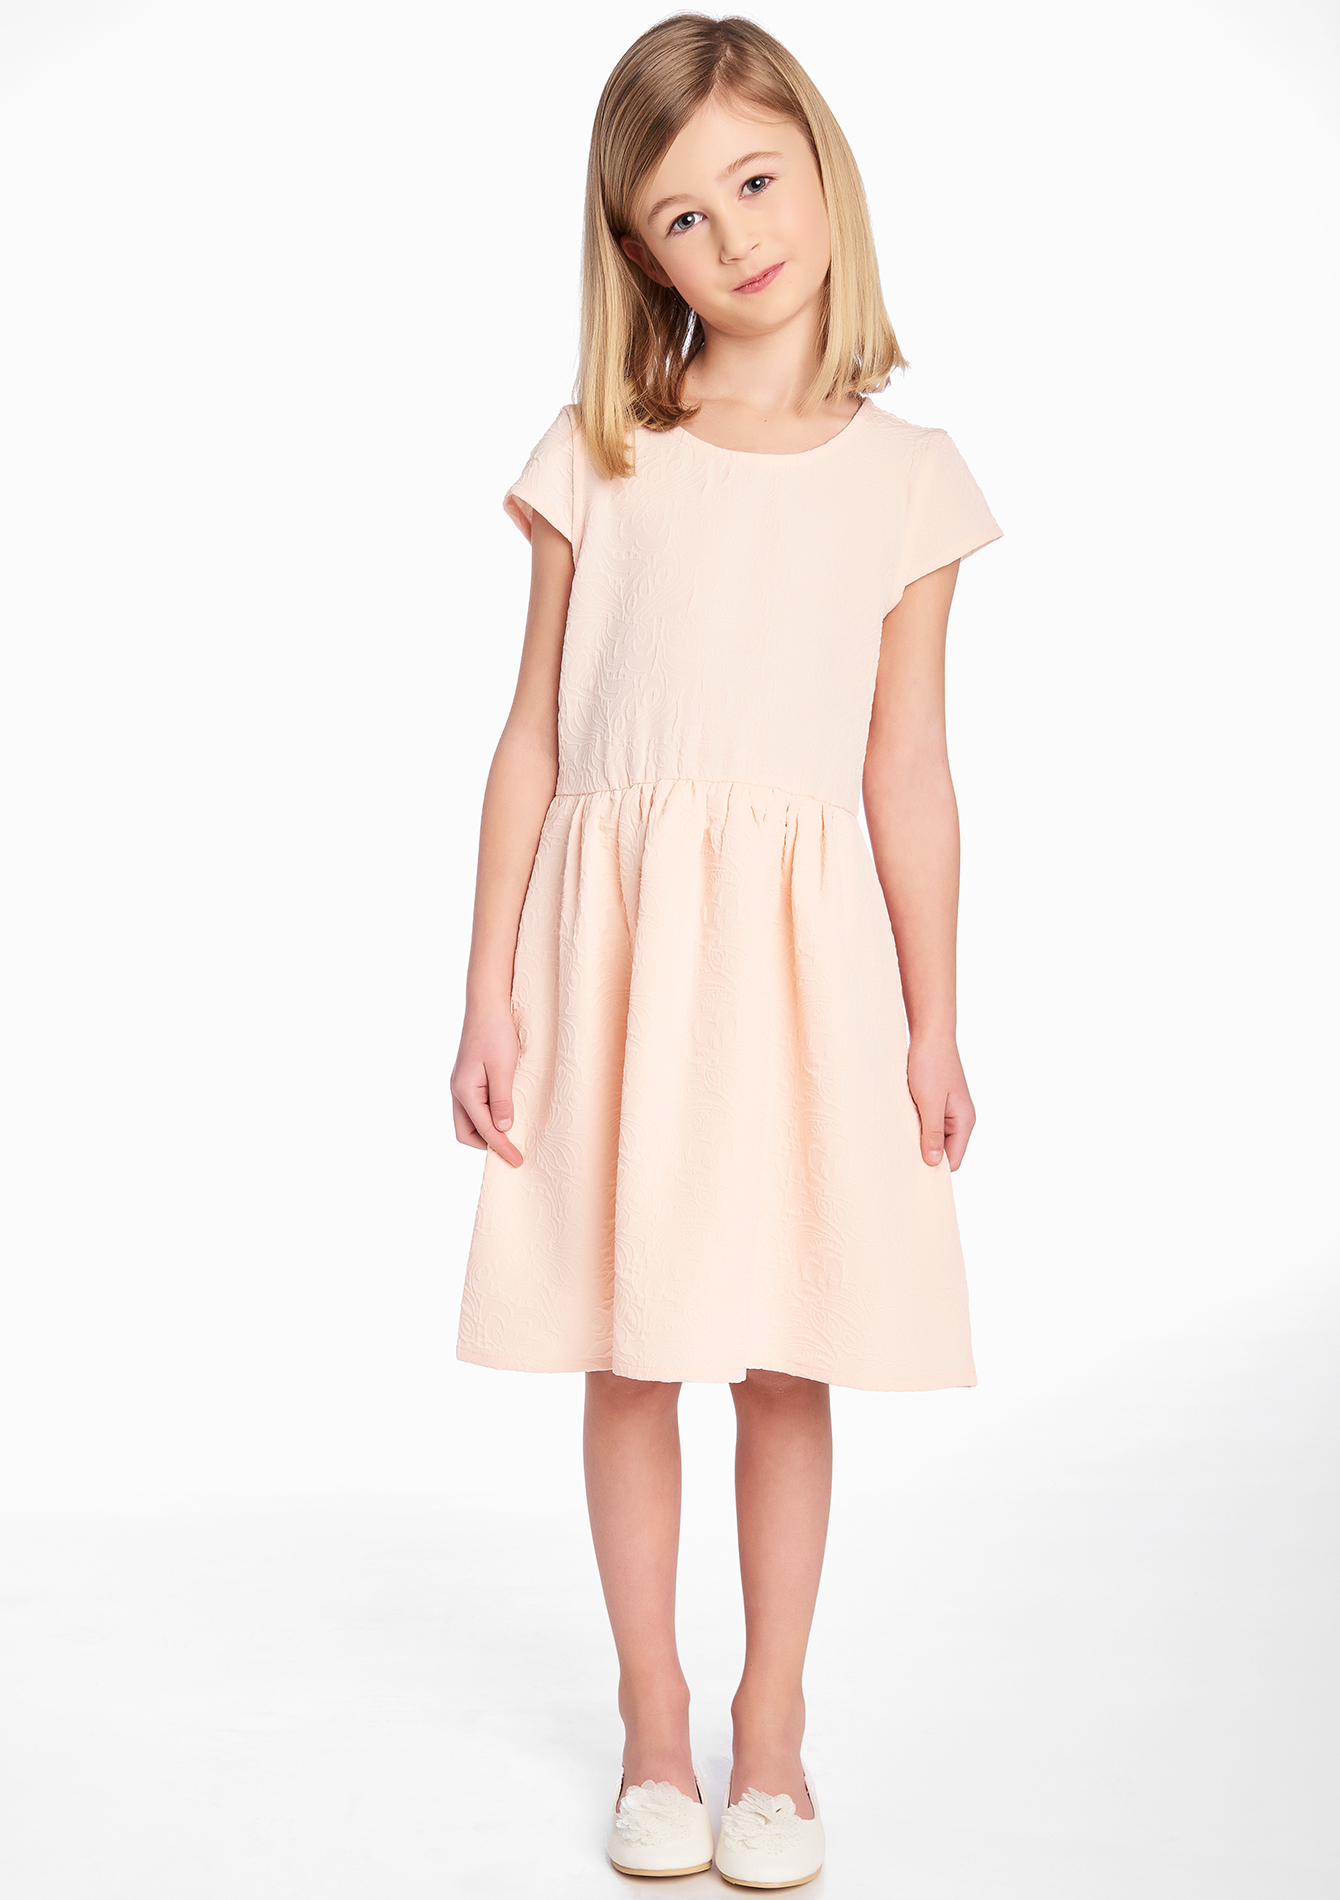 Child dress with tone-on-tone print - LOLALIZA